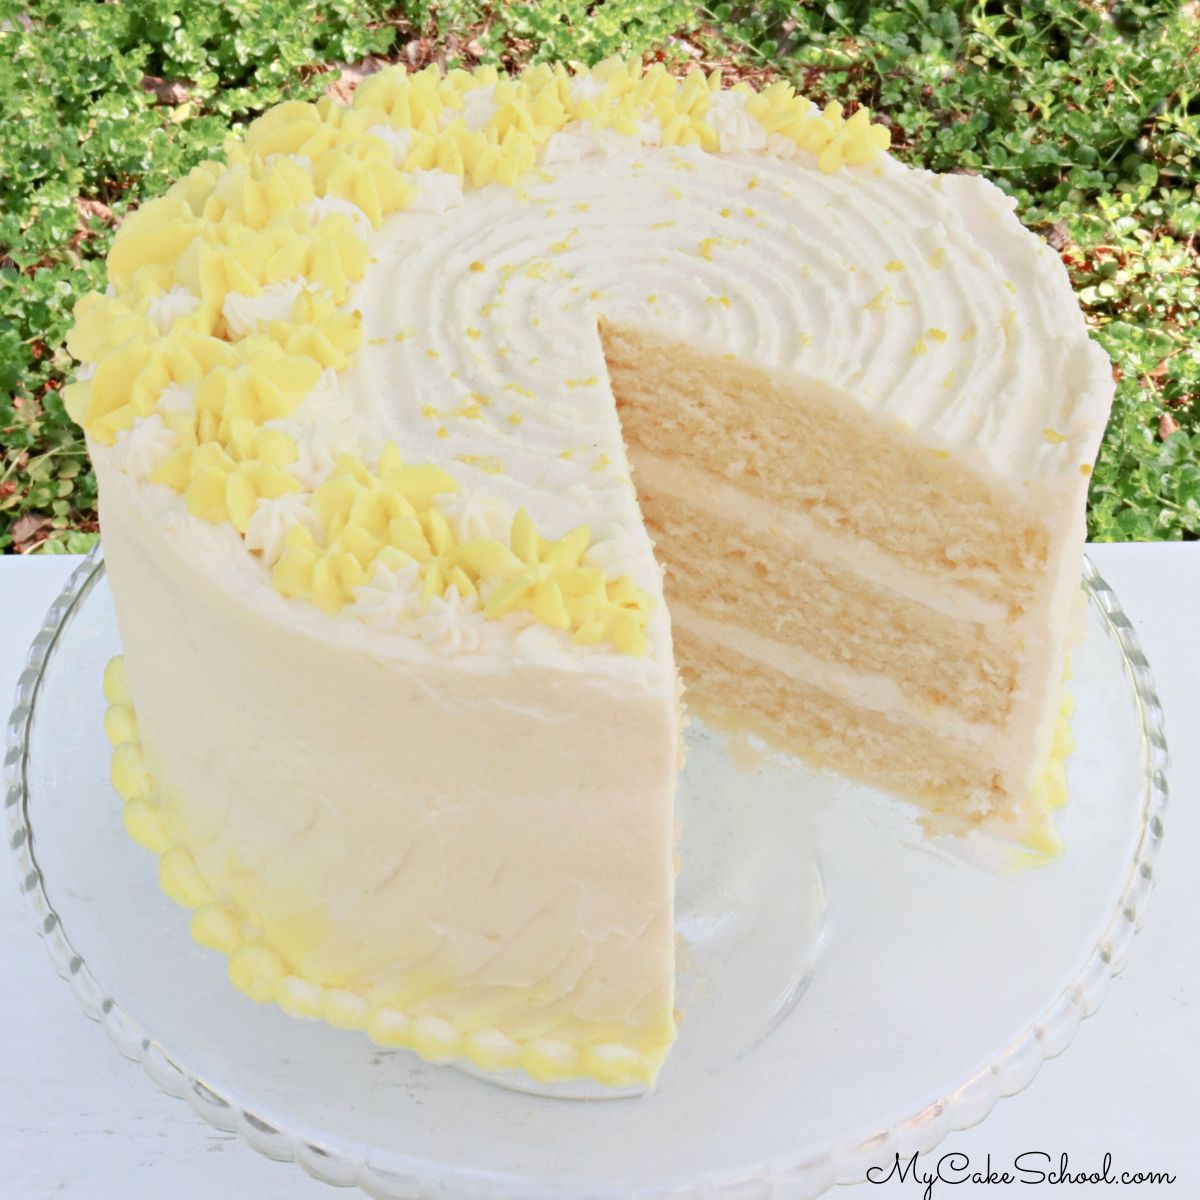 https://www.mycakeschool.com/images/2021/04/Lemon-Buttermilk-Cake-featured-photo.jpg